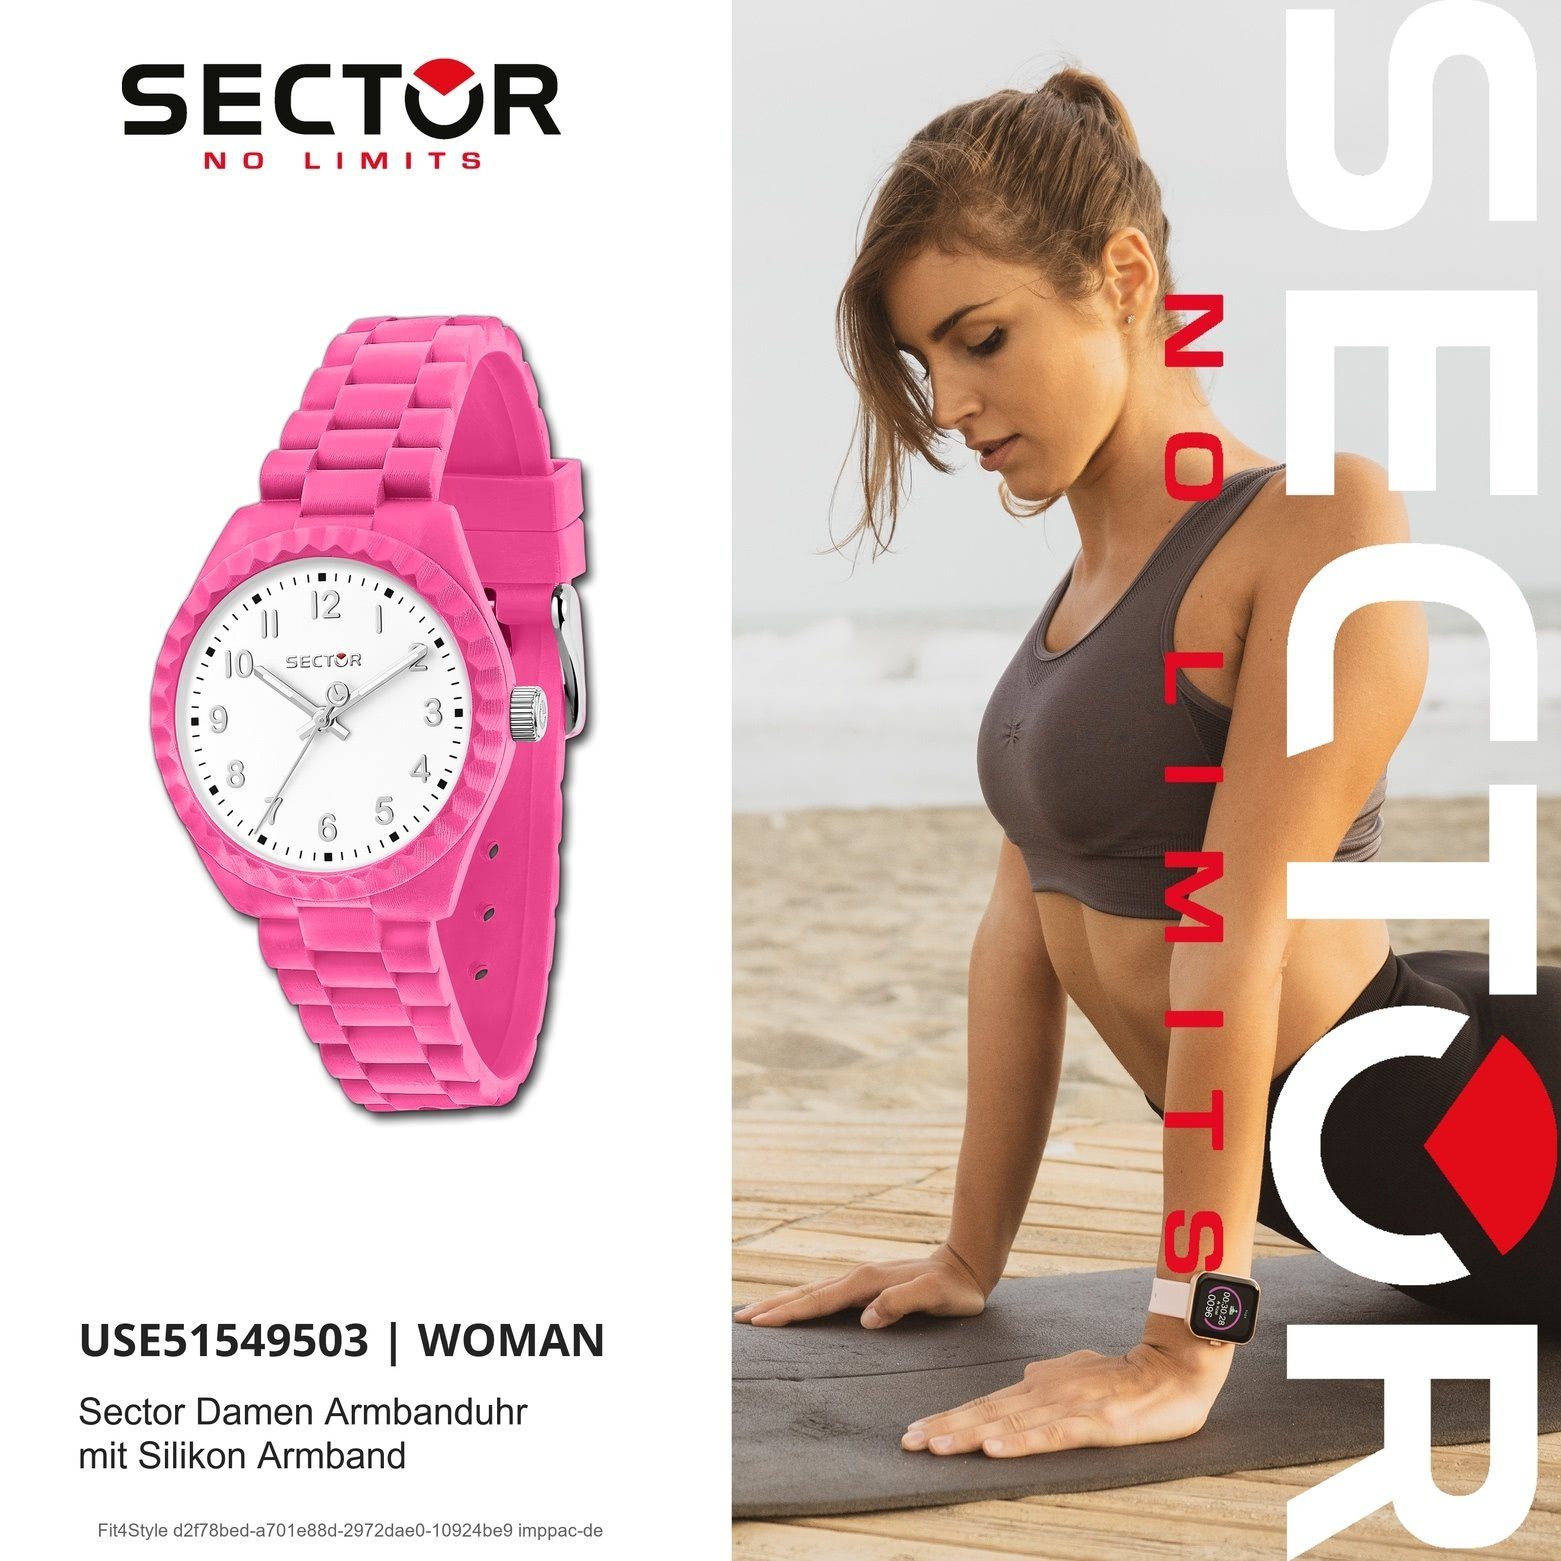 Damen rosa, (ca. Armbanduhr Damen Fashion Sector Armbanduhr Silikonarmband rund, Quarzuhr Analog, Sector 42mm), groß